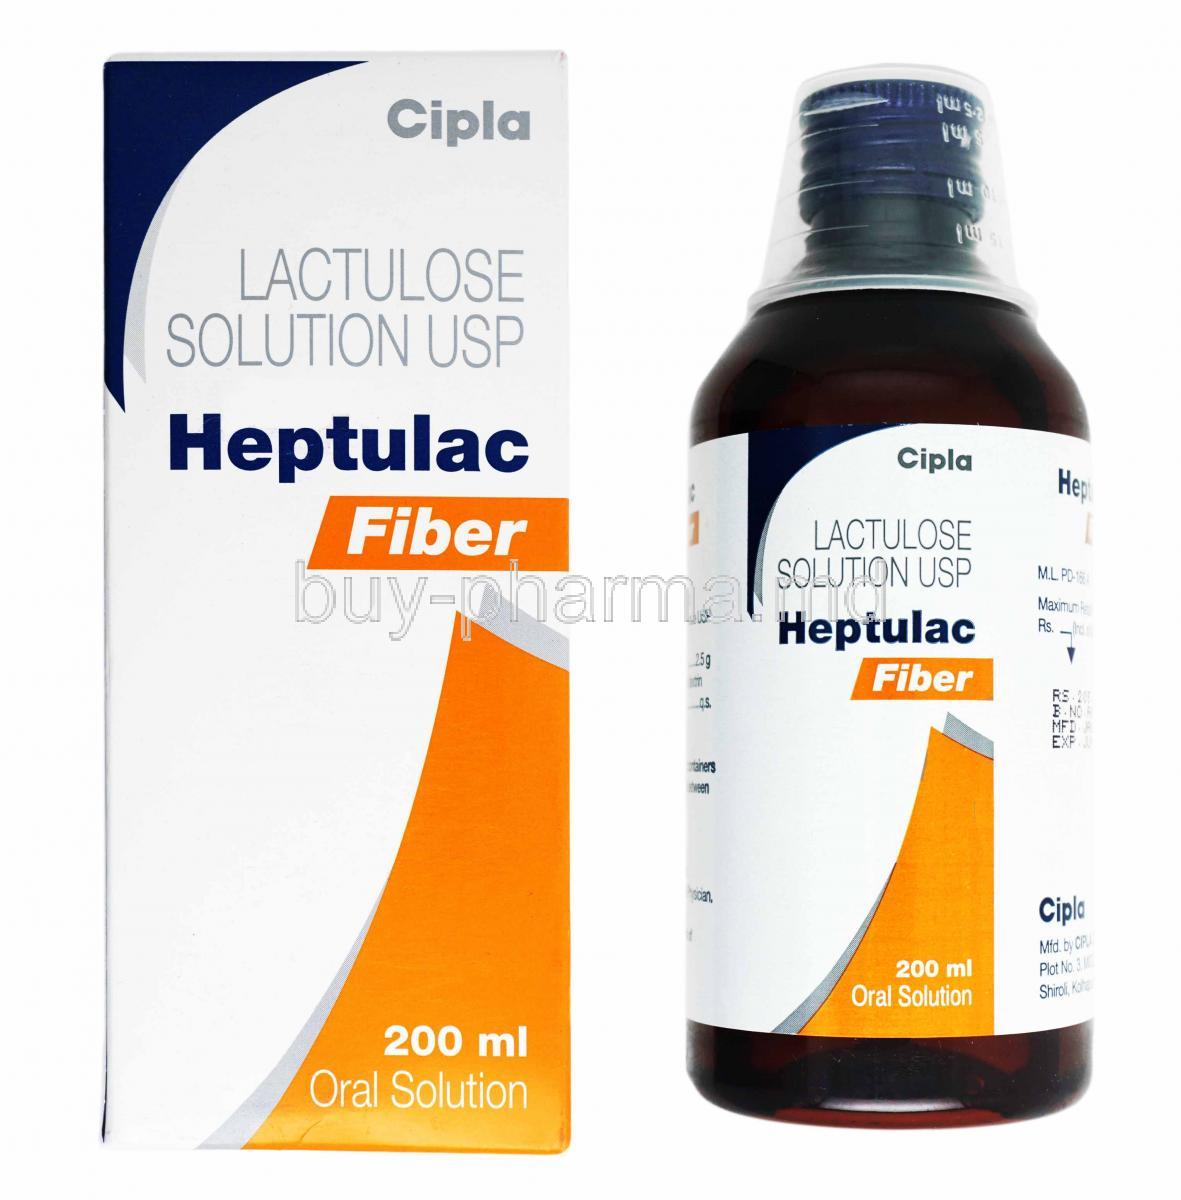 Heptulac Fiber Oral Solution 200ml Lactulose box and bottle